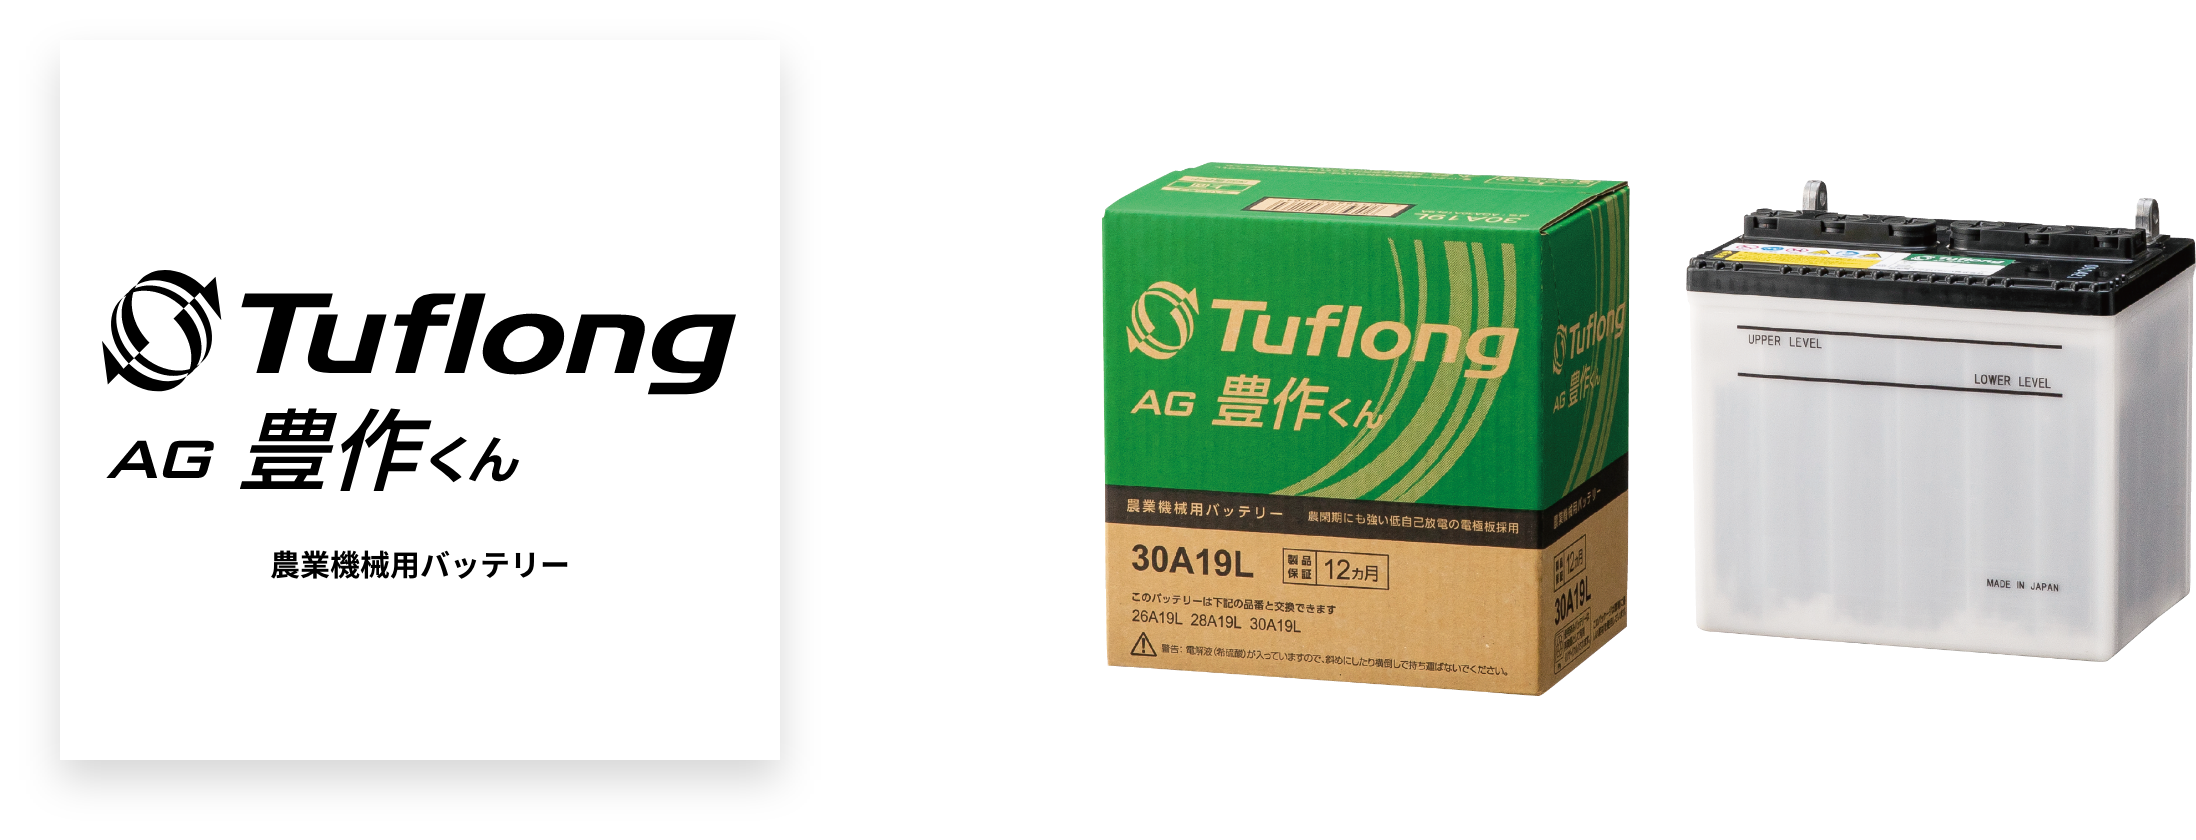 Tuflong AG 豊作くん - エナジーウィズ株式会社